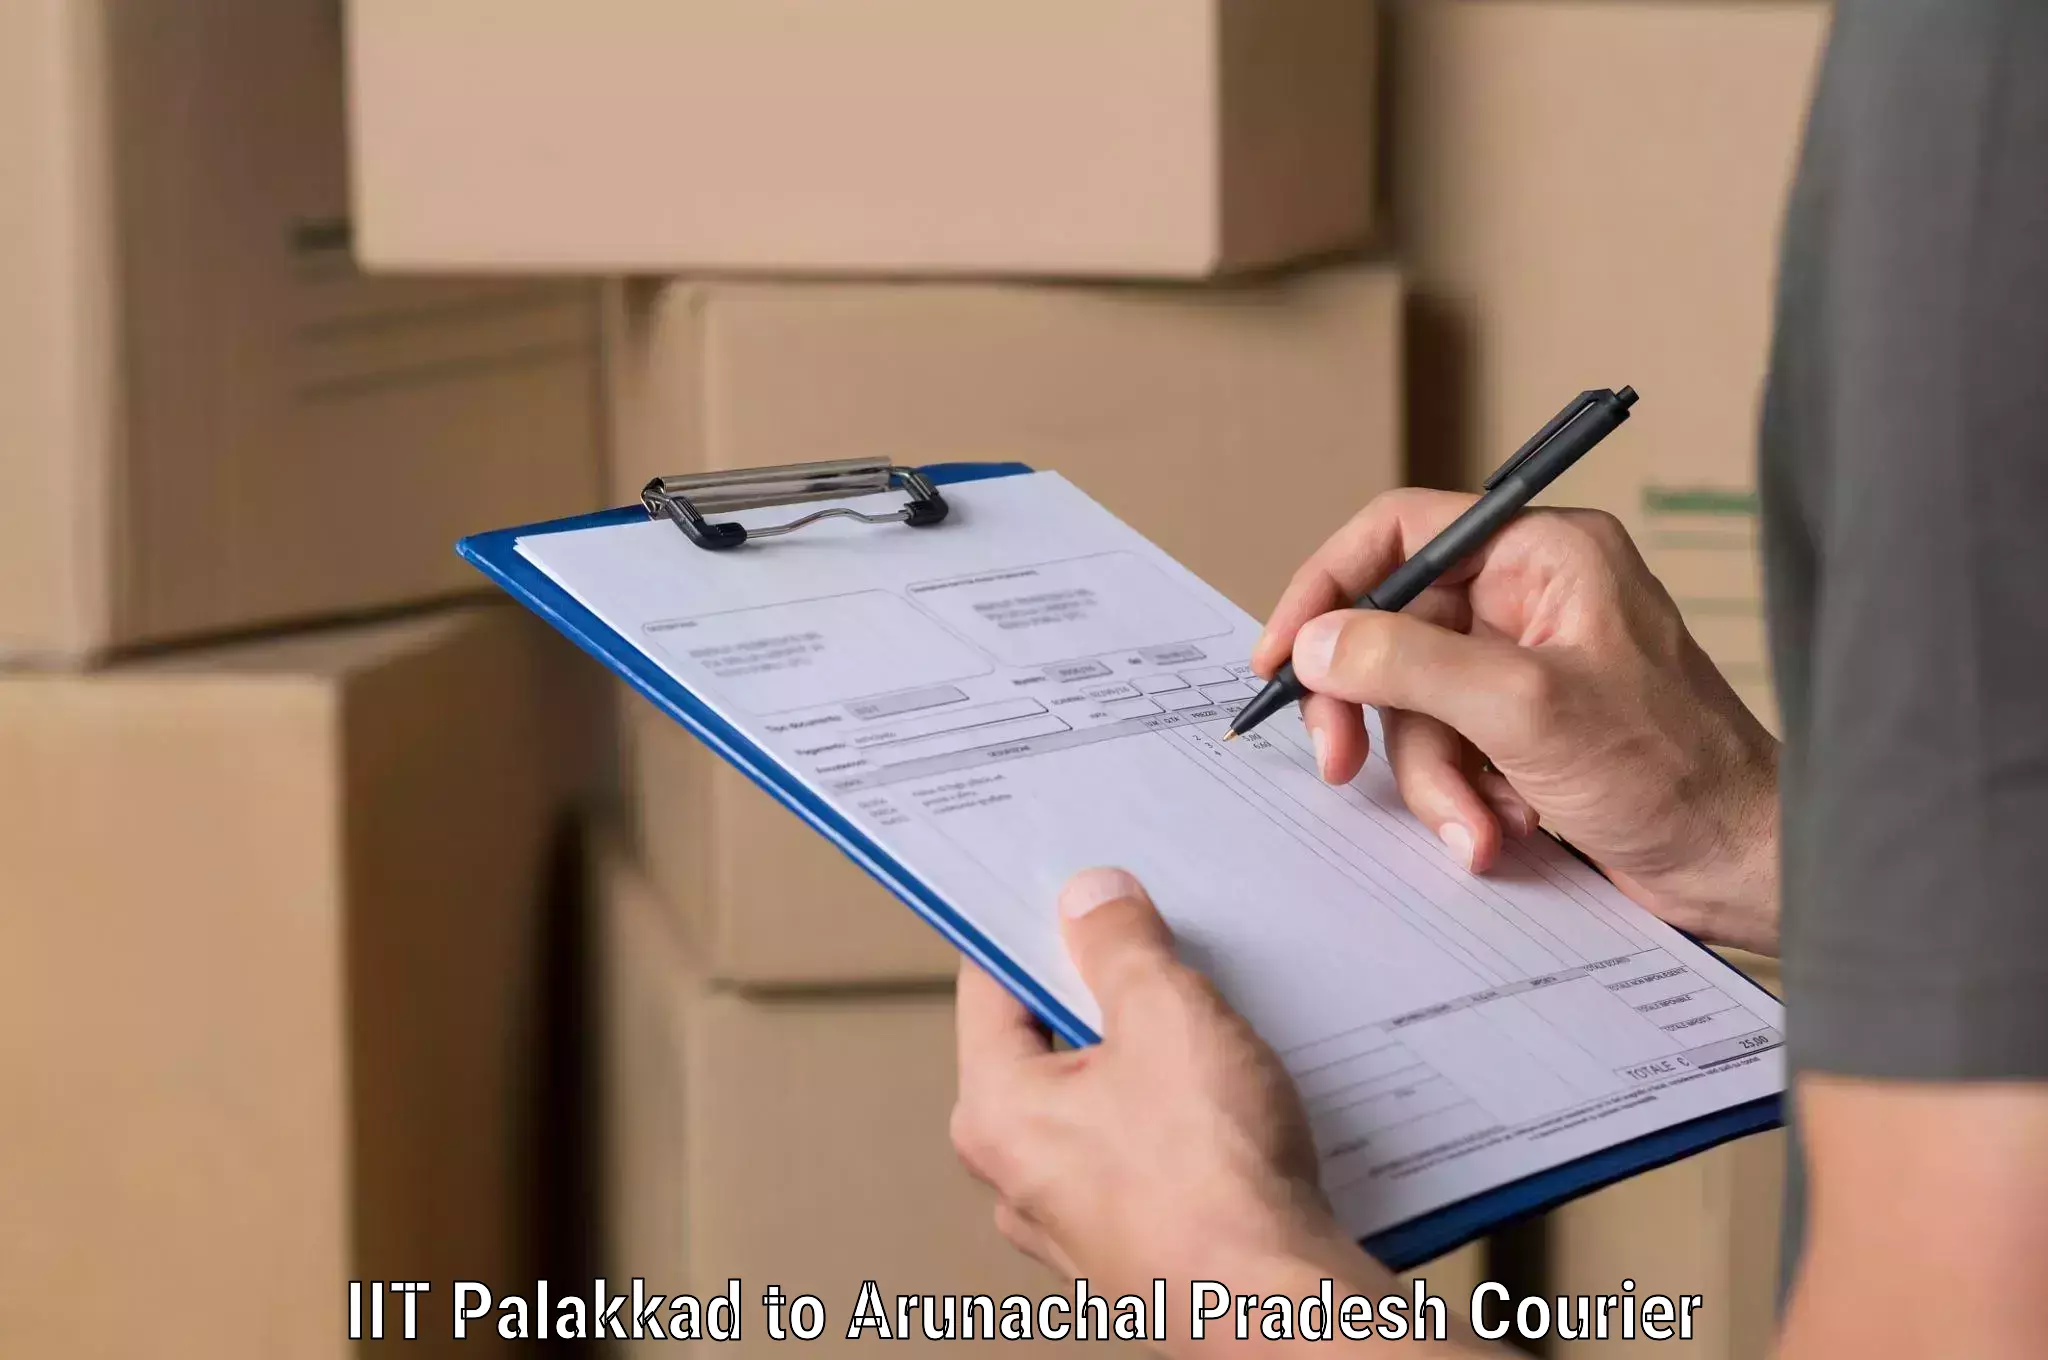 Global logistics network IIT Palakkad to Dirang